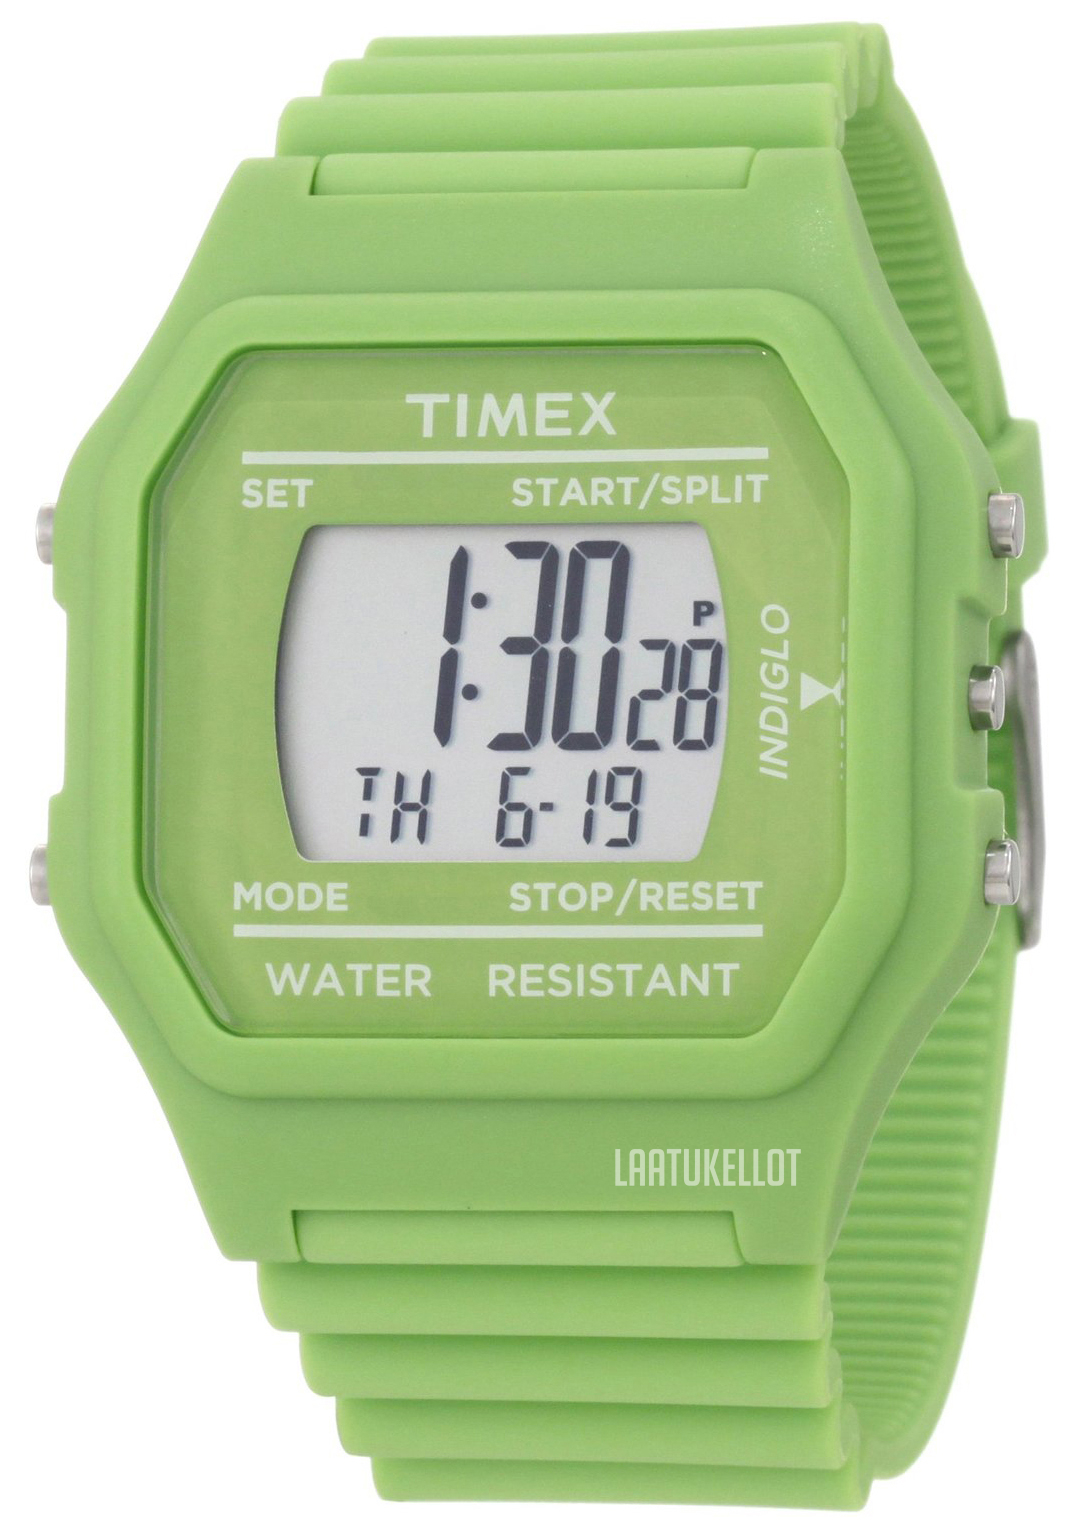 Часы т 80. Timex t80. Timex t80 Expansion. Часы Timex т80. Часы Timex коллекция t80.